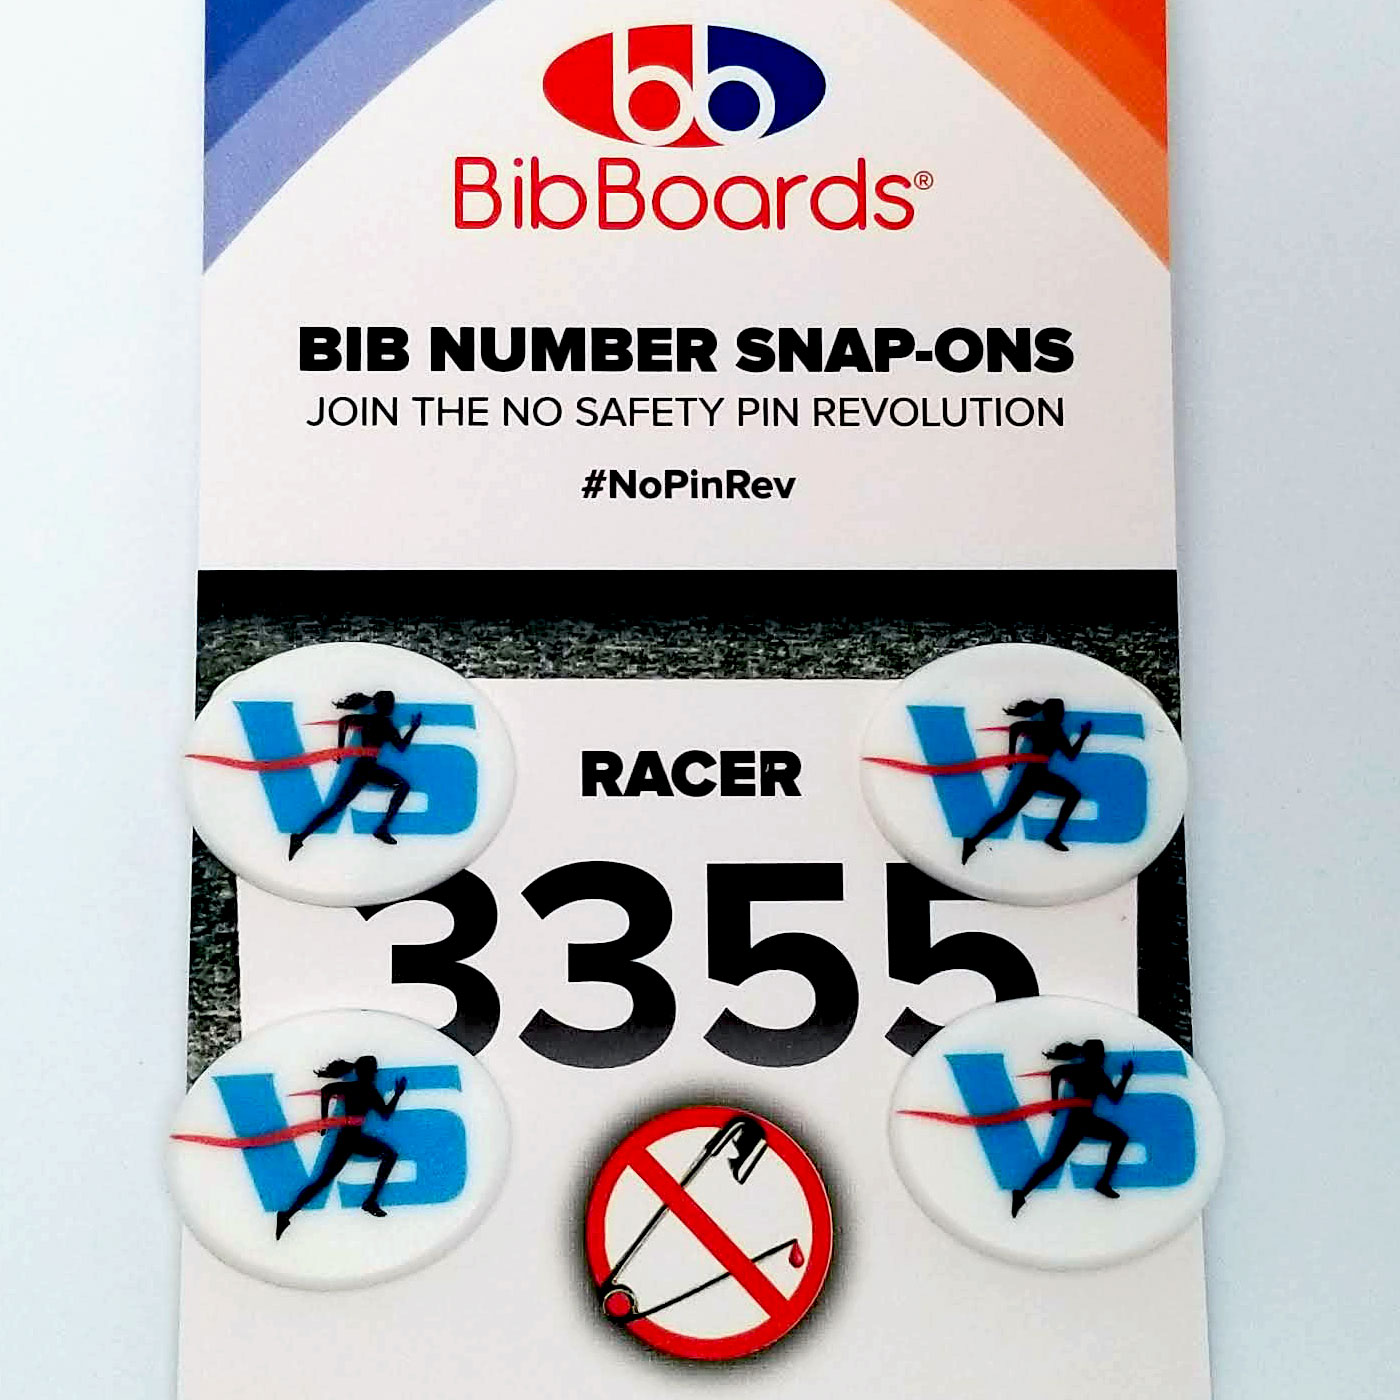 Oh Snap – My Race Bib is Finally Straight thanks to bibSNAPS! - BibBoards